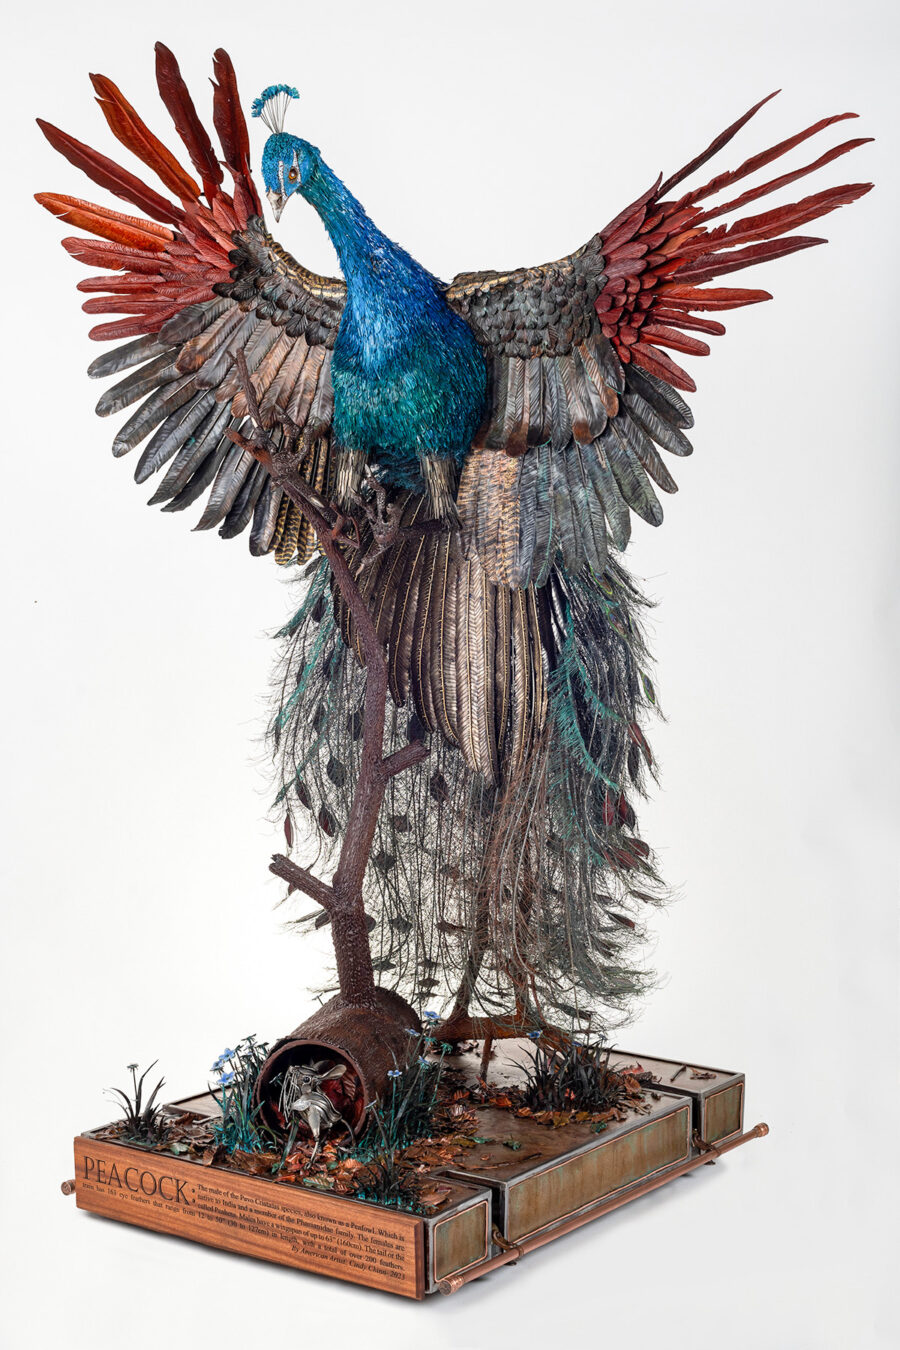 Peacock Sculpture by Cindy Chinn - 17